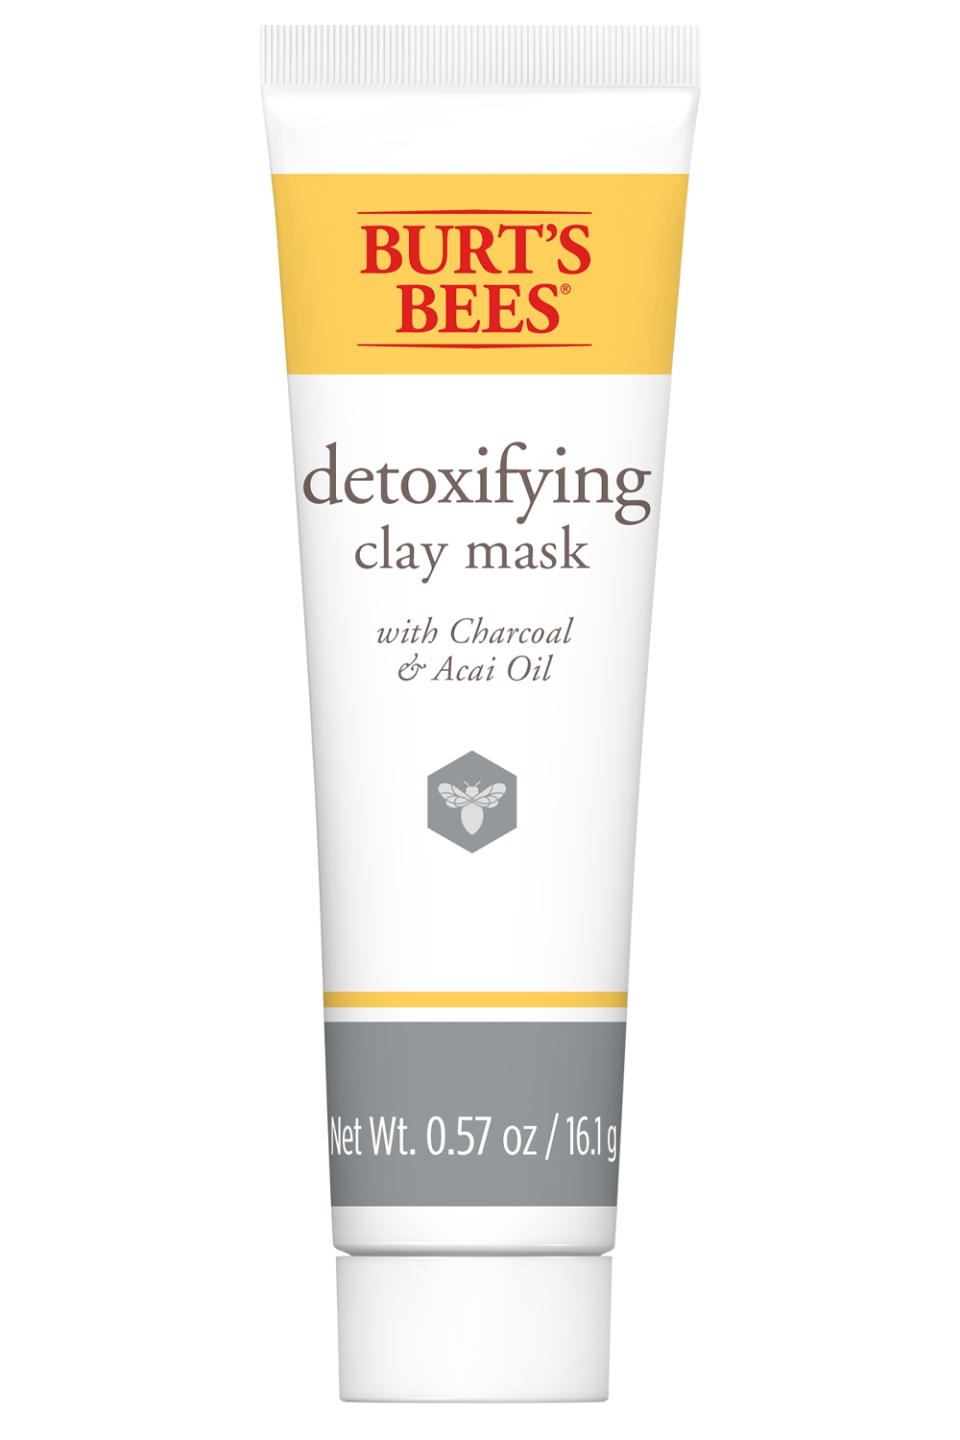 15) Burts Bees Detoxifying Clay Mask